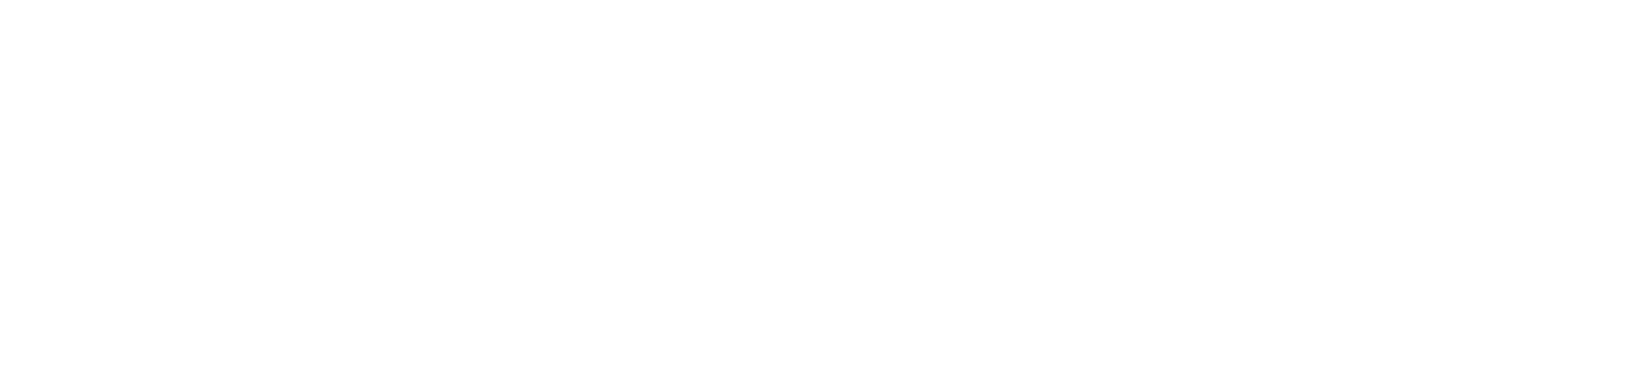 PhoenixSeniorLiving